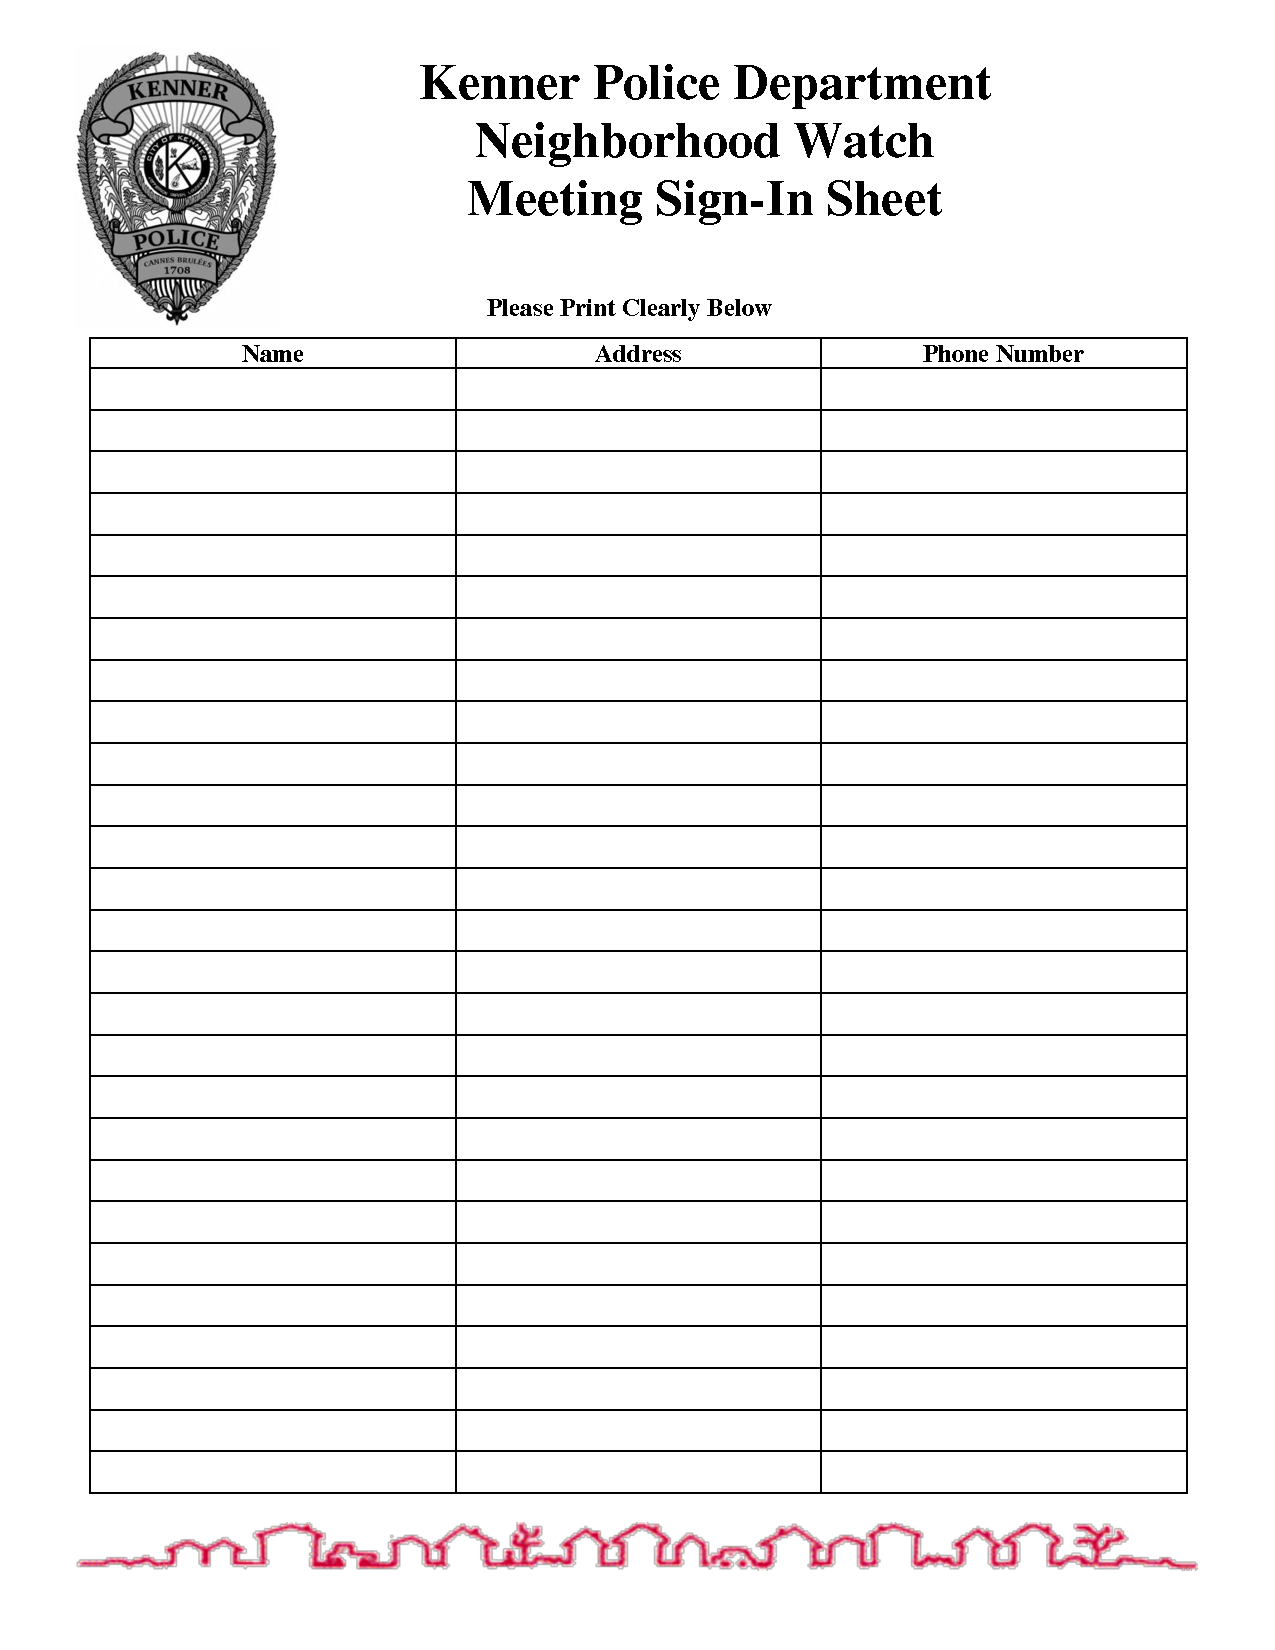 Meeting Sign Up Sheet Template